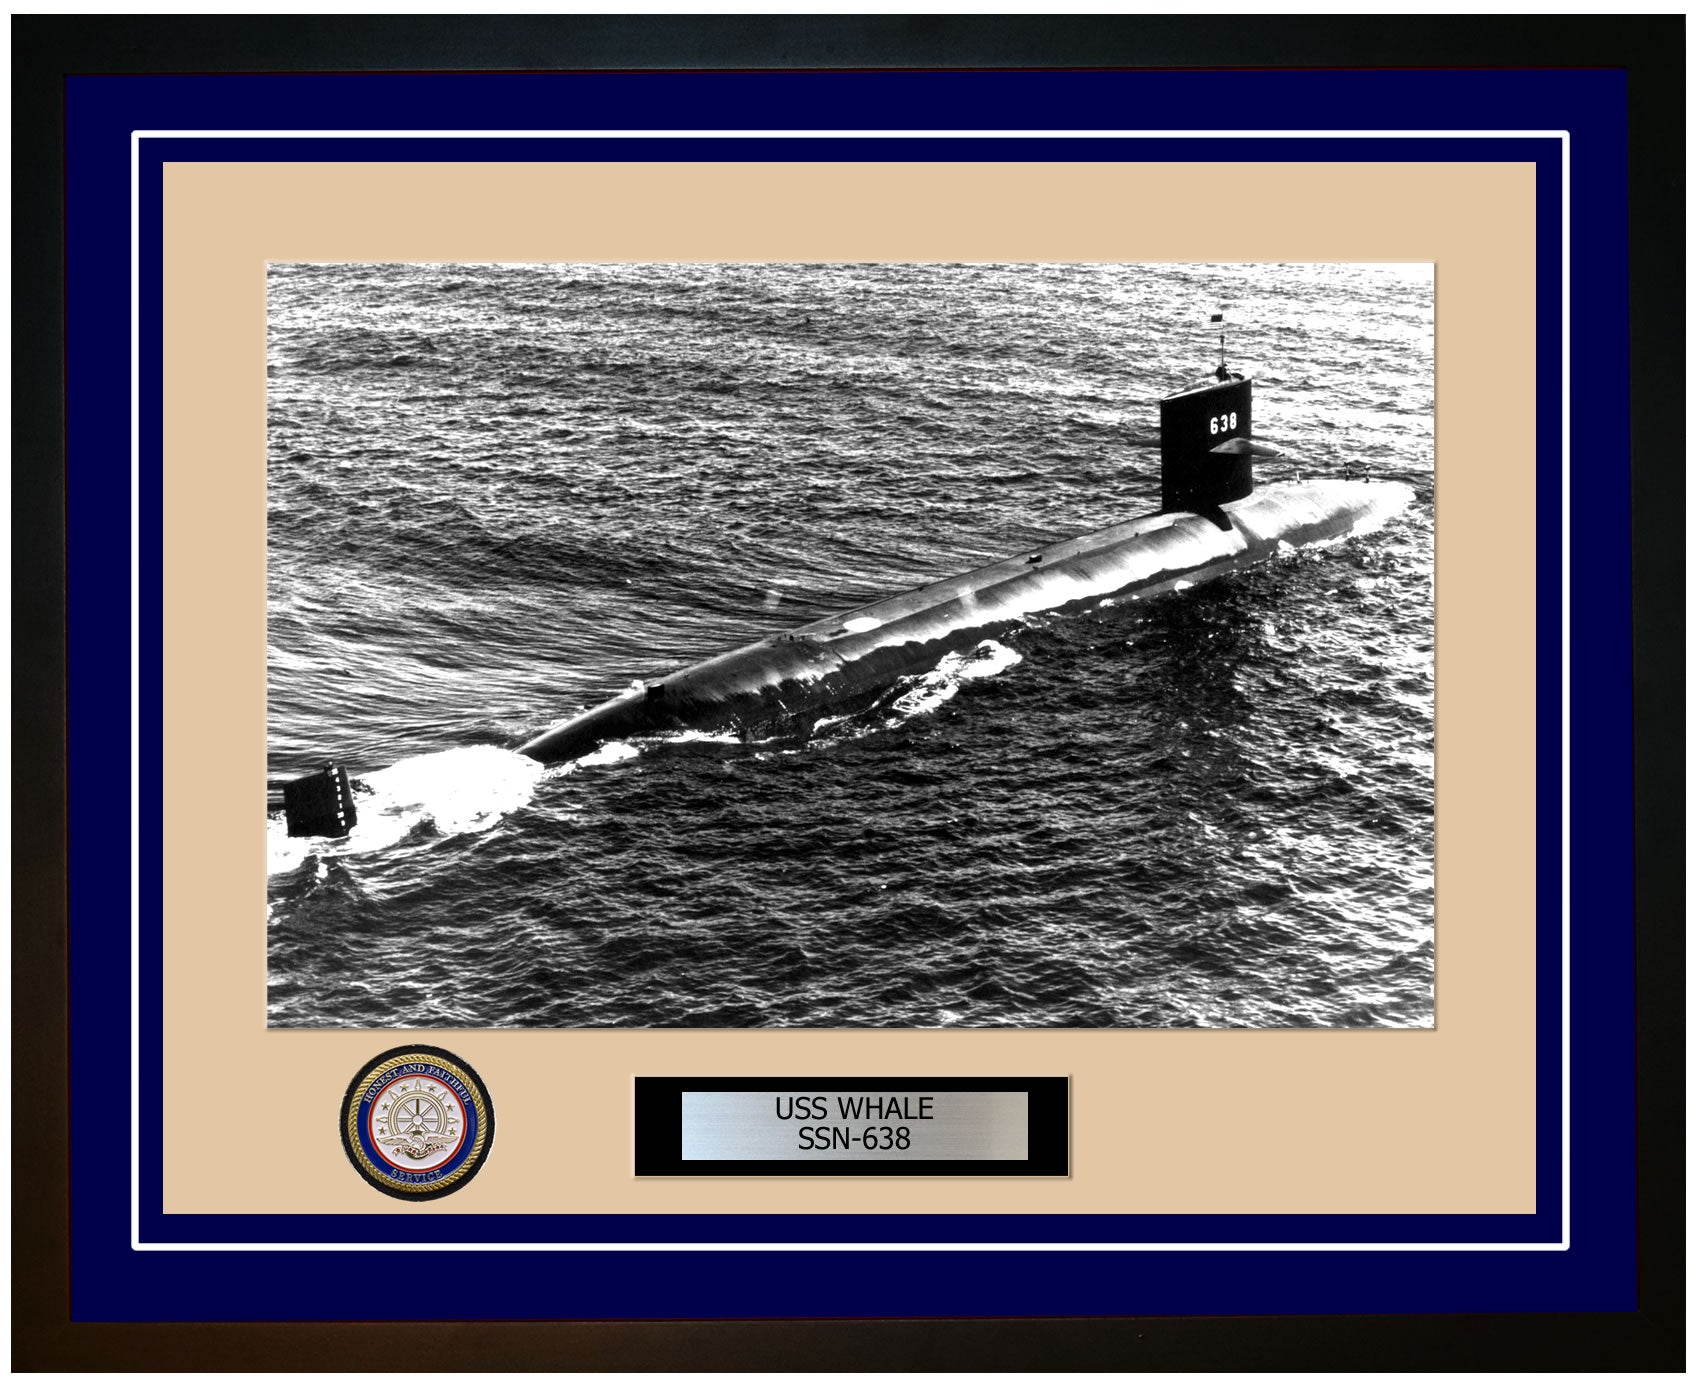 USS Whale SSN-638 Framed Navy Ship Photo Blue